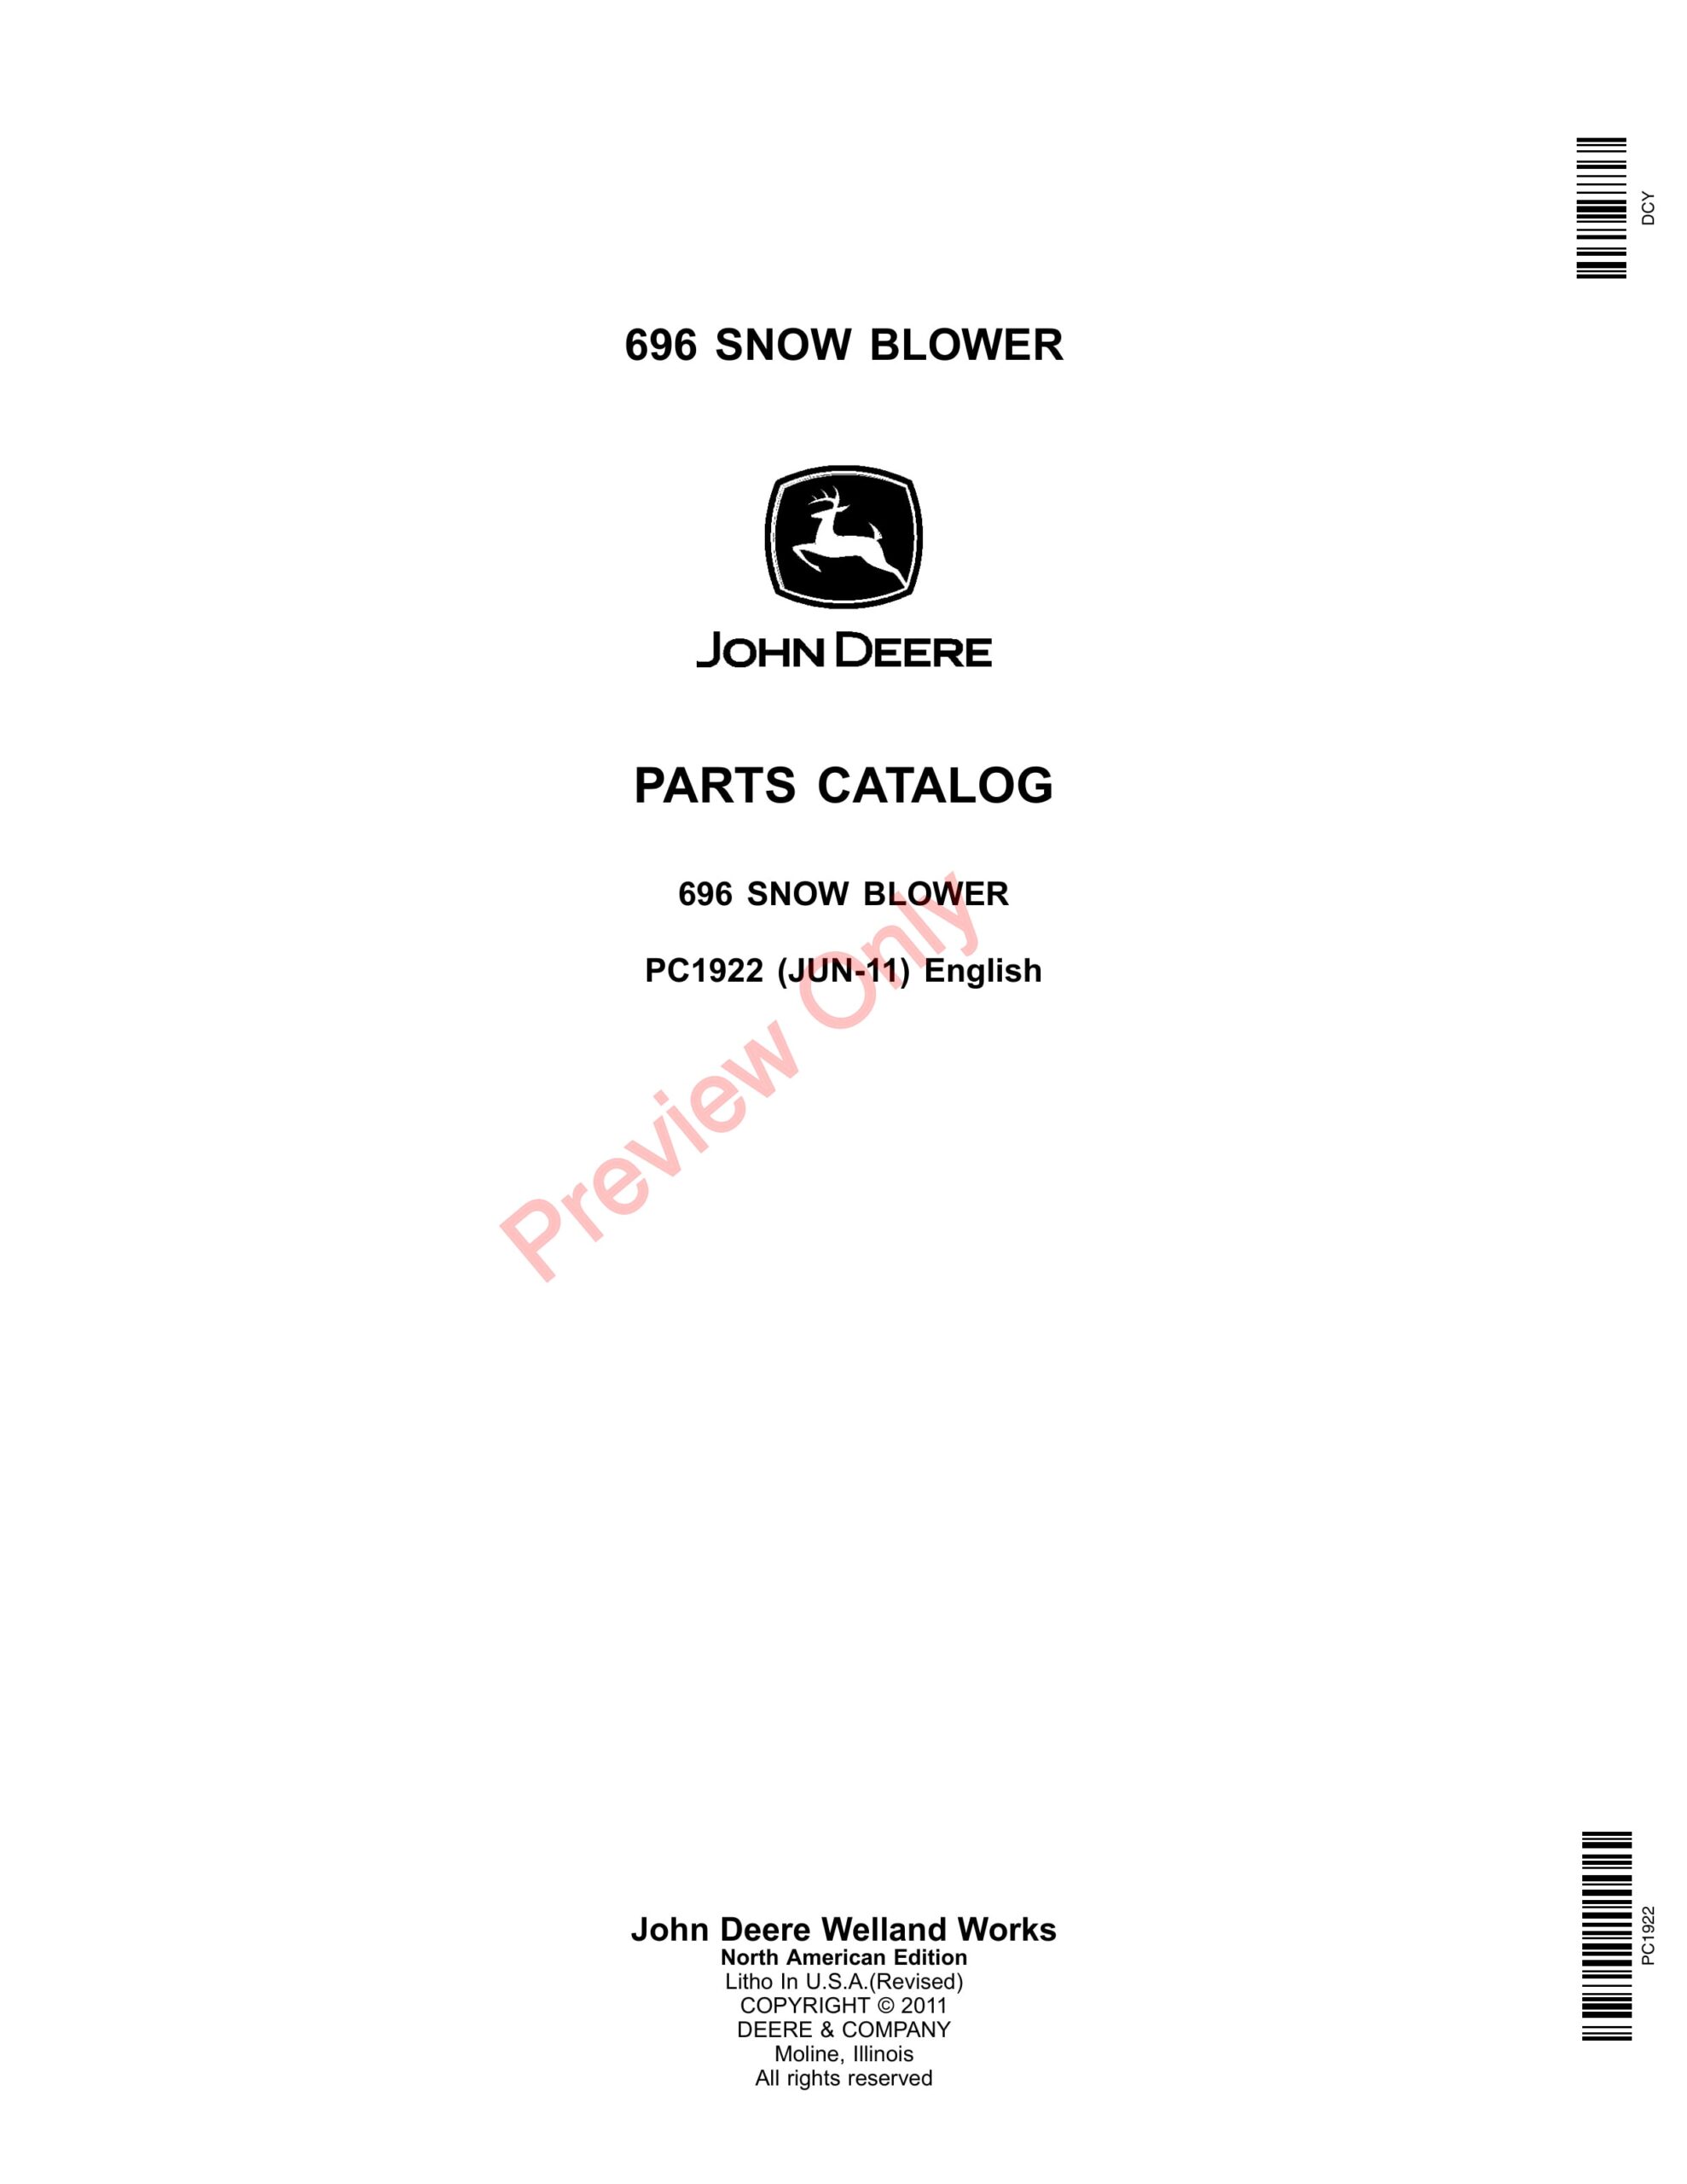 John Deere 696 Snow Blower Parts Catalog PC1922 01JUN11-1